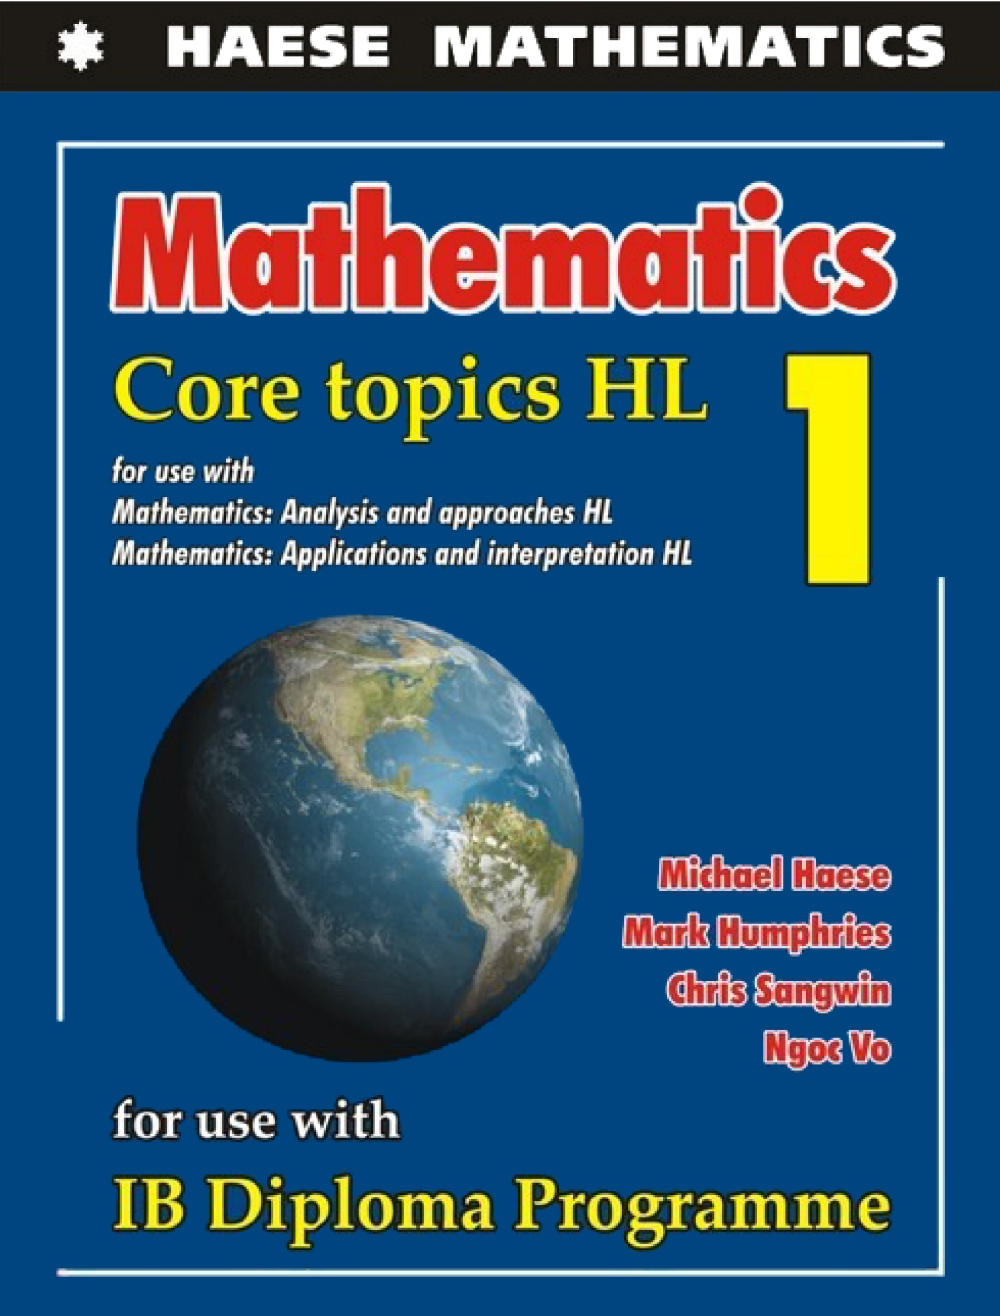 Mathematics Core Topics HL 1 Haese 2019 Pobierz pdf z Docer.pl